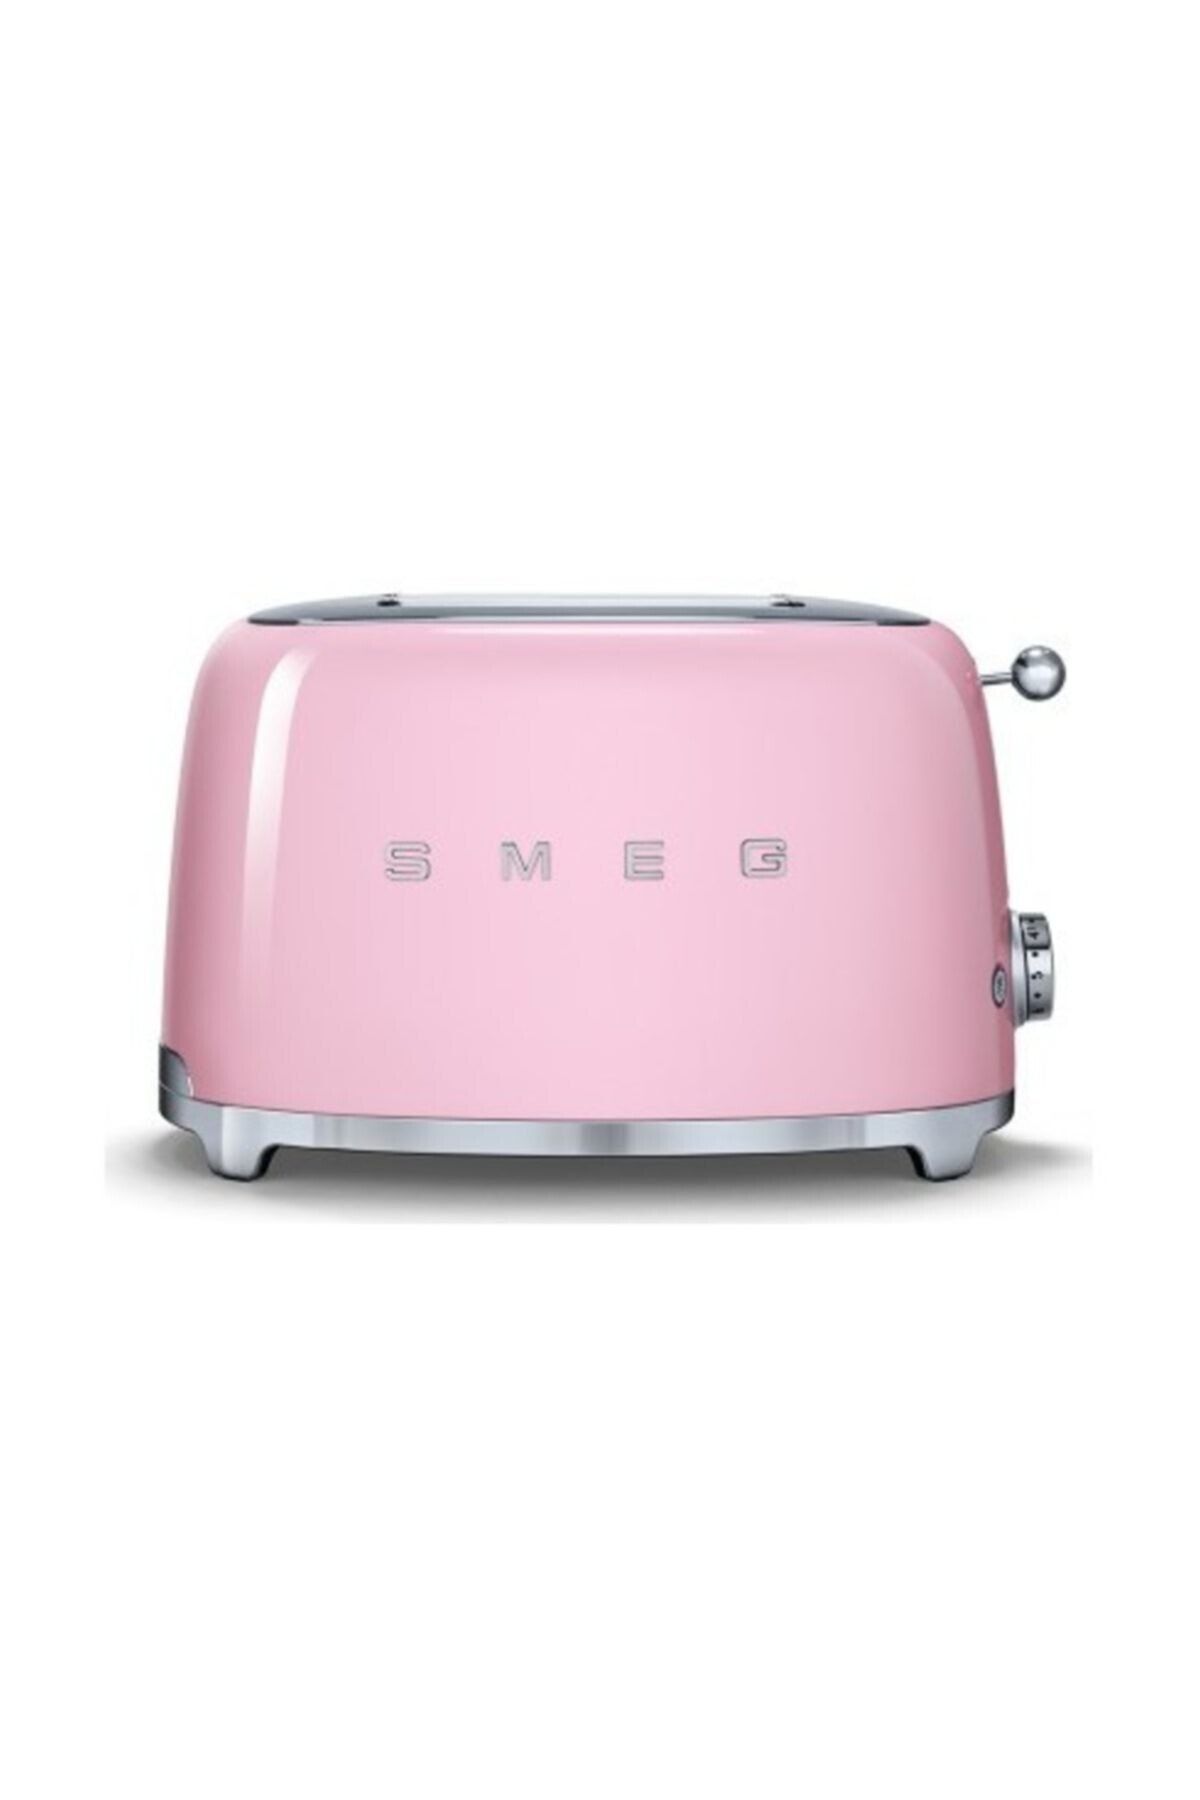 SMEG Pembe 1x2 Ekmek Kızartma Makinesi